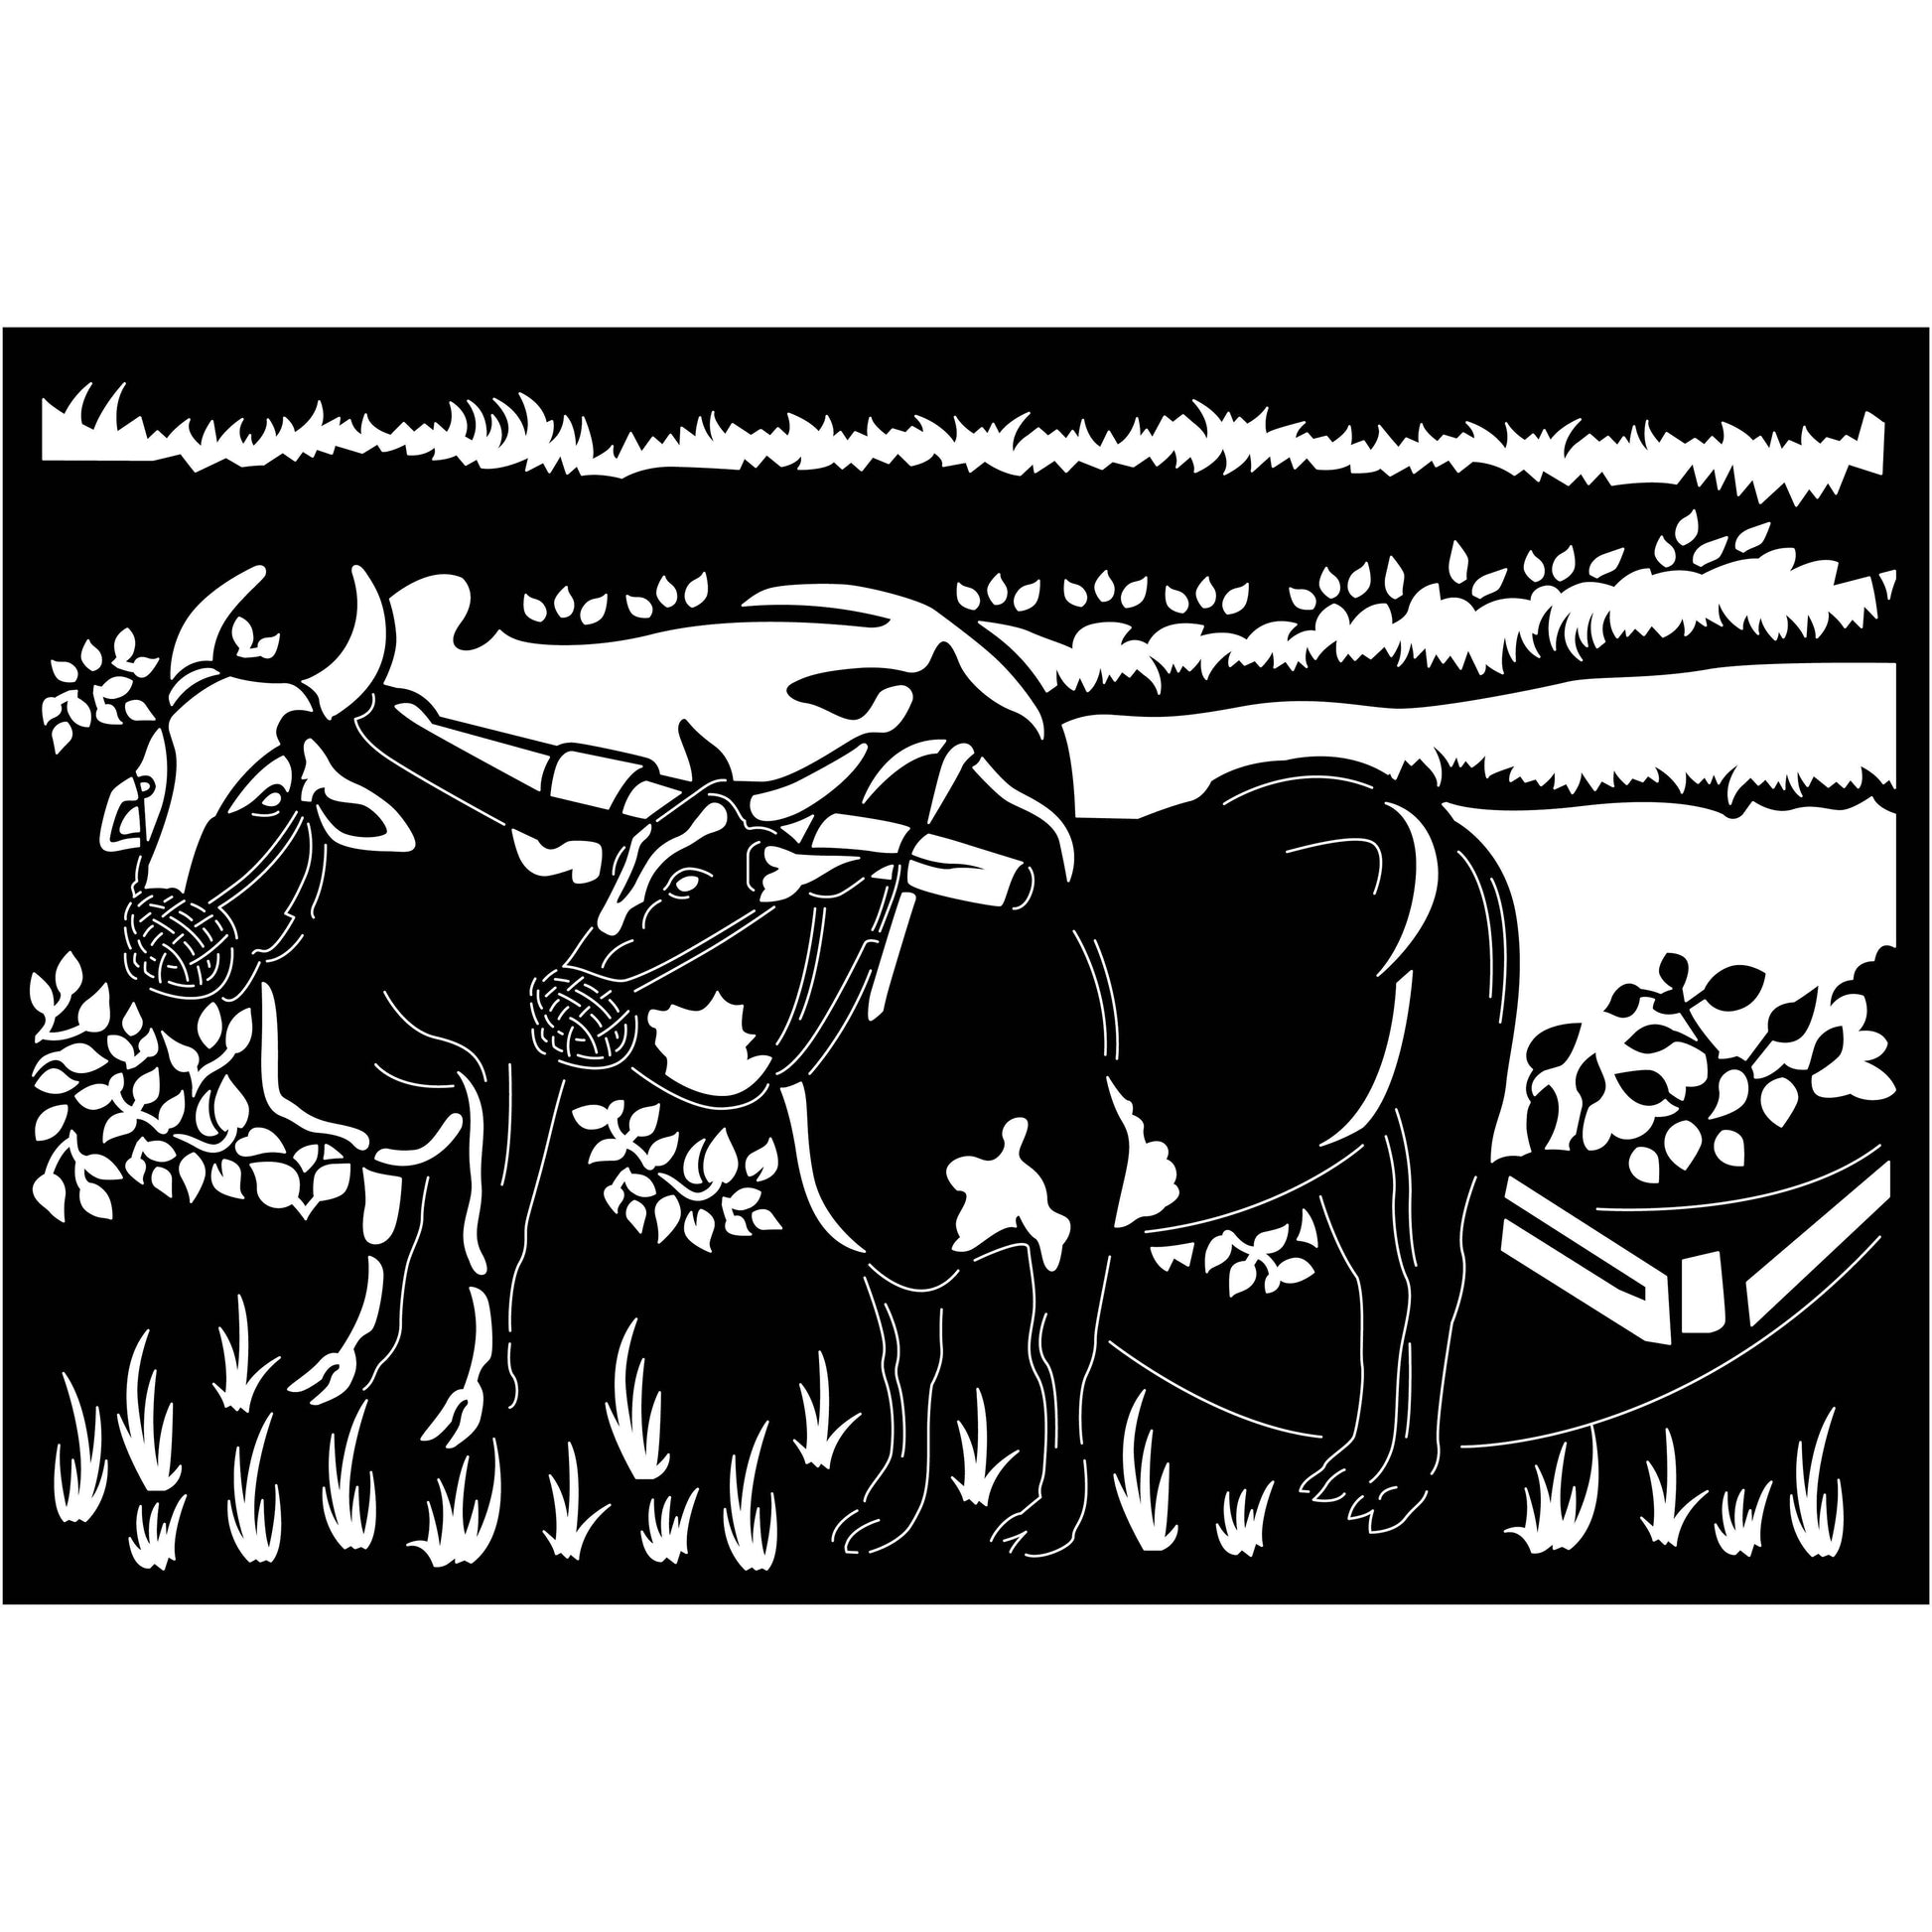 Cows Plow Farms Scene-DXF files Cut Ready for CNC-DXFforCNC.com